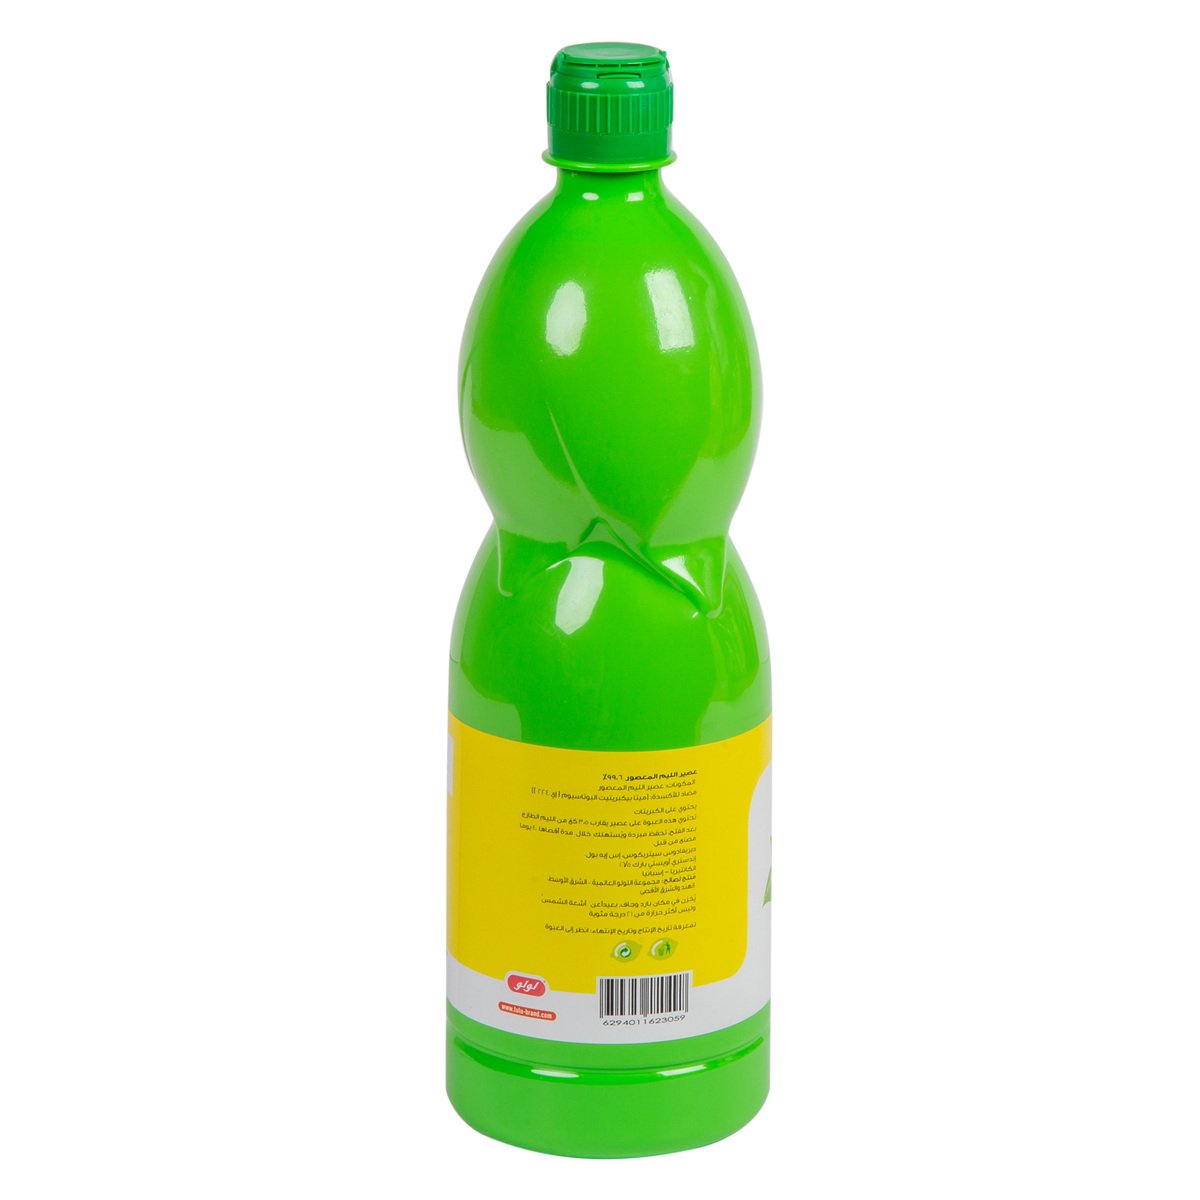 LuLu Squeezed Lime Juice 1 Litre